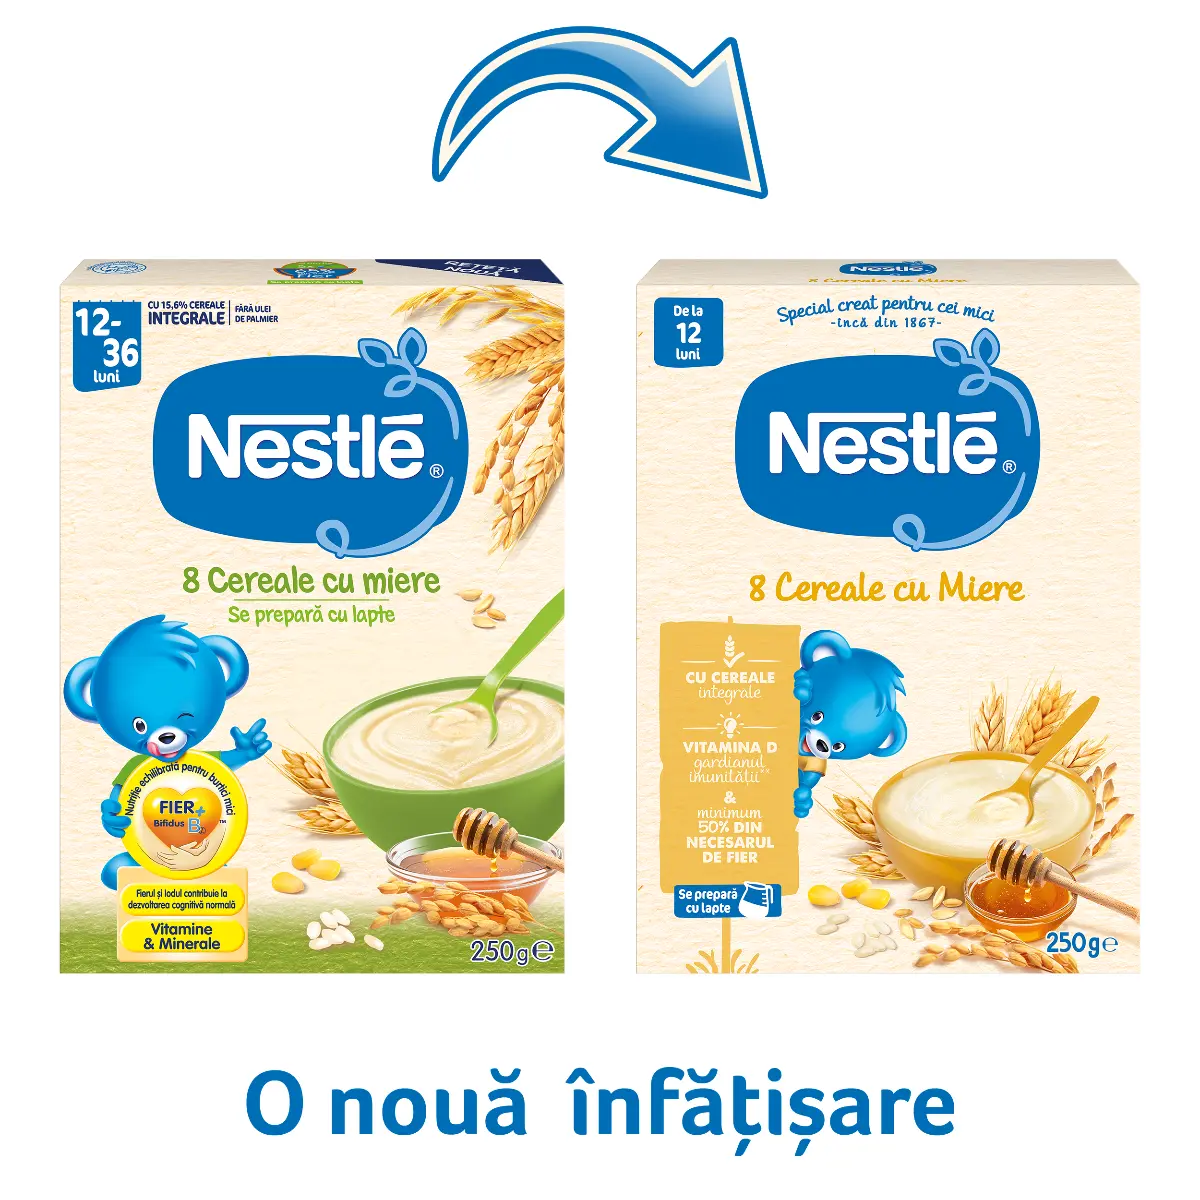 Cereale Nestle 8 Cereale cu Miere, 250g, de la 12 luni